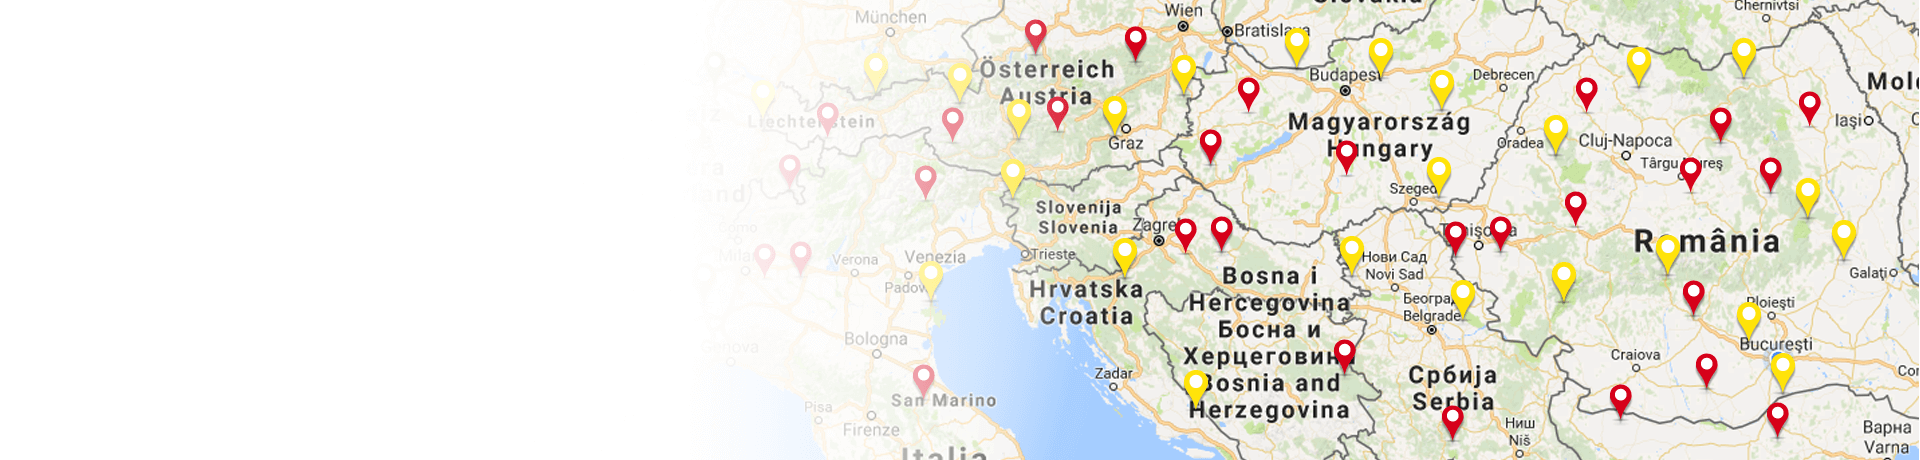 BursaDeTractari.ro - Map image